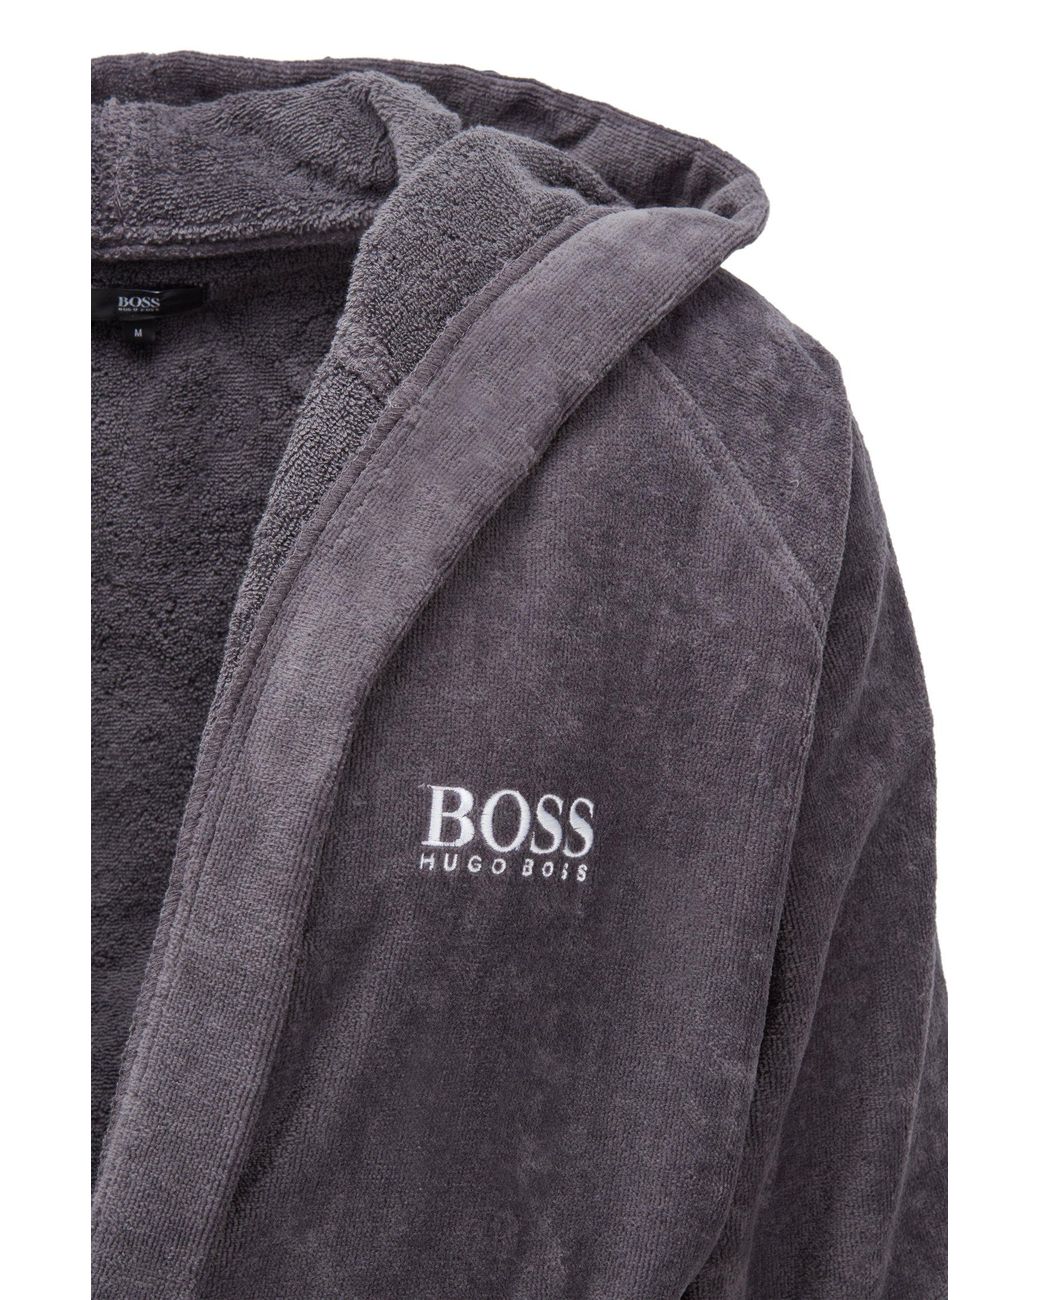 bathrobe hugo boss